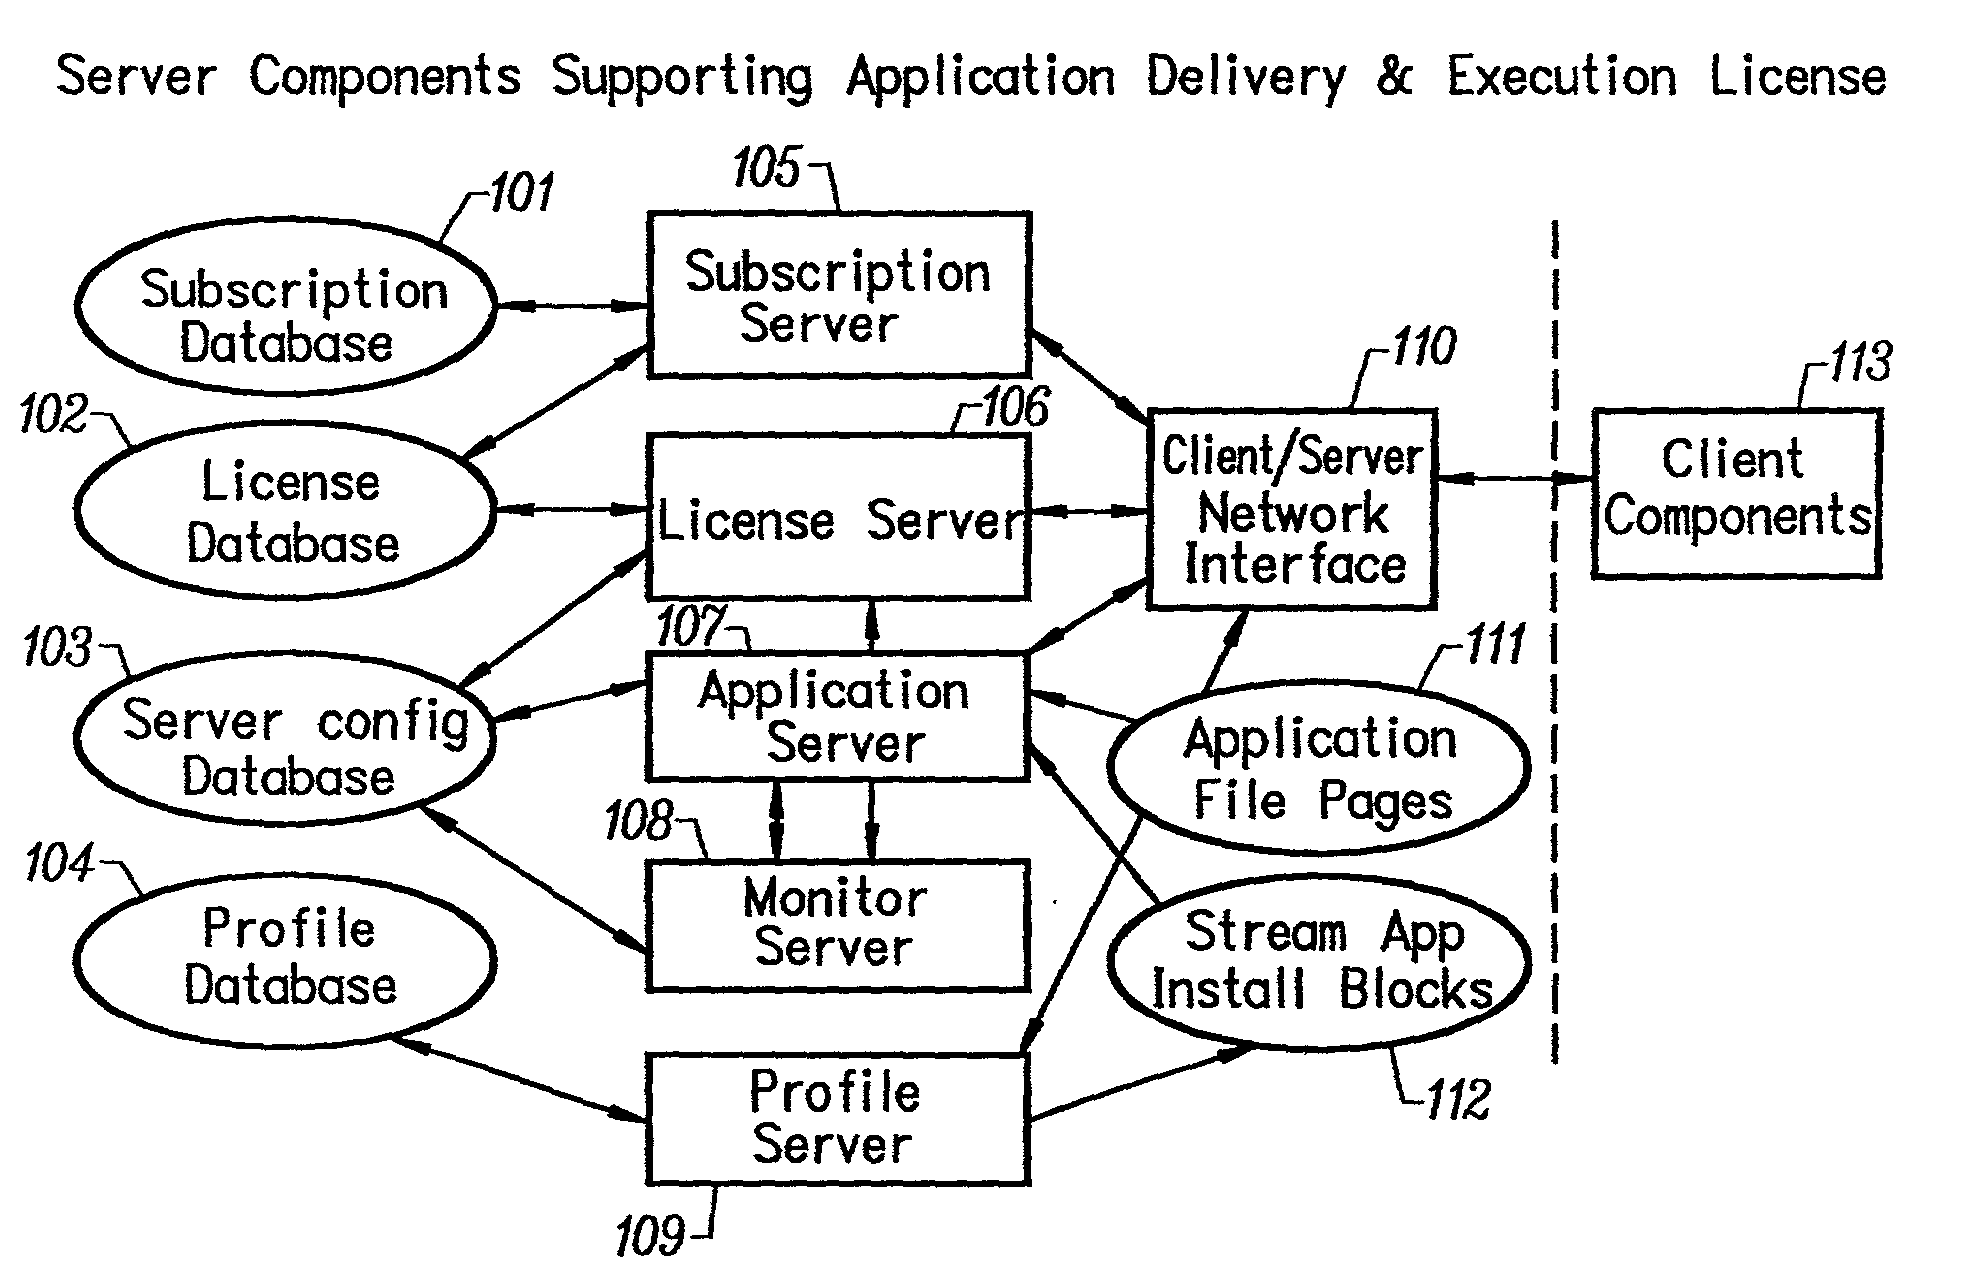 Optimized server for streamed applications